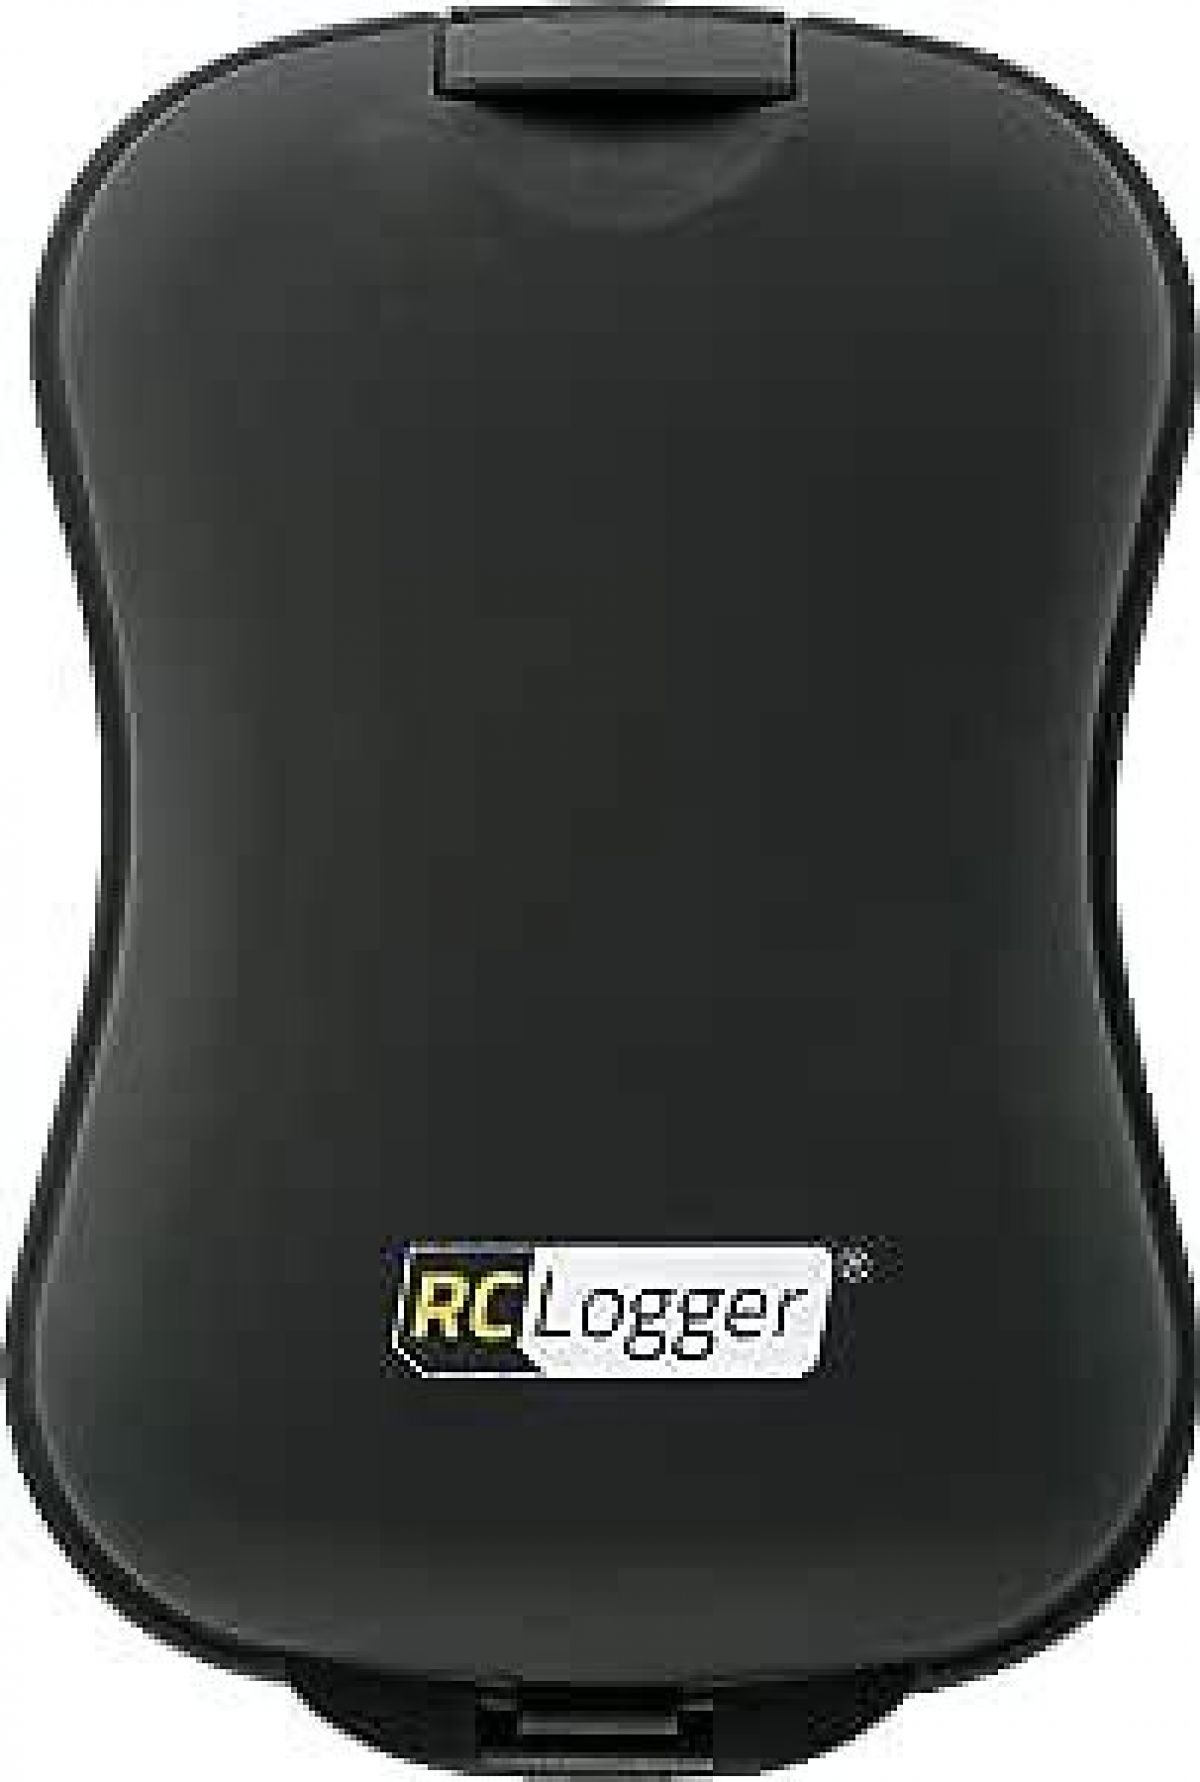 Чехол / сумка для переноски аксессуаров RC Logger 2266851